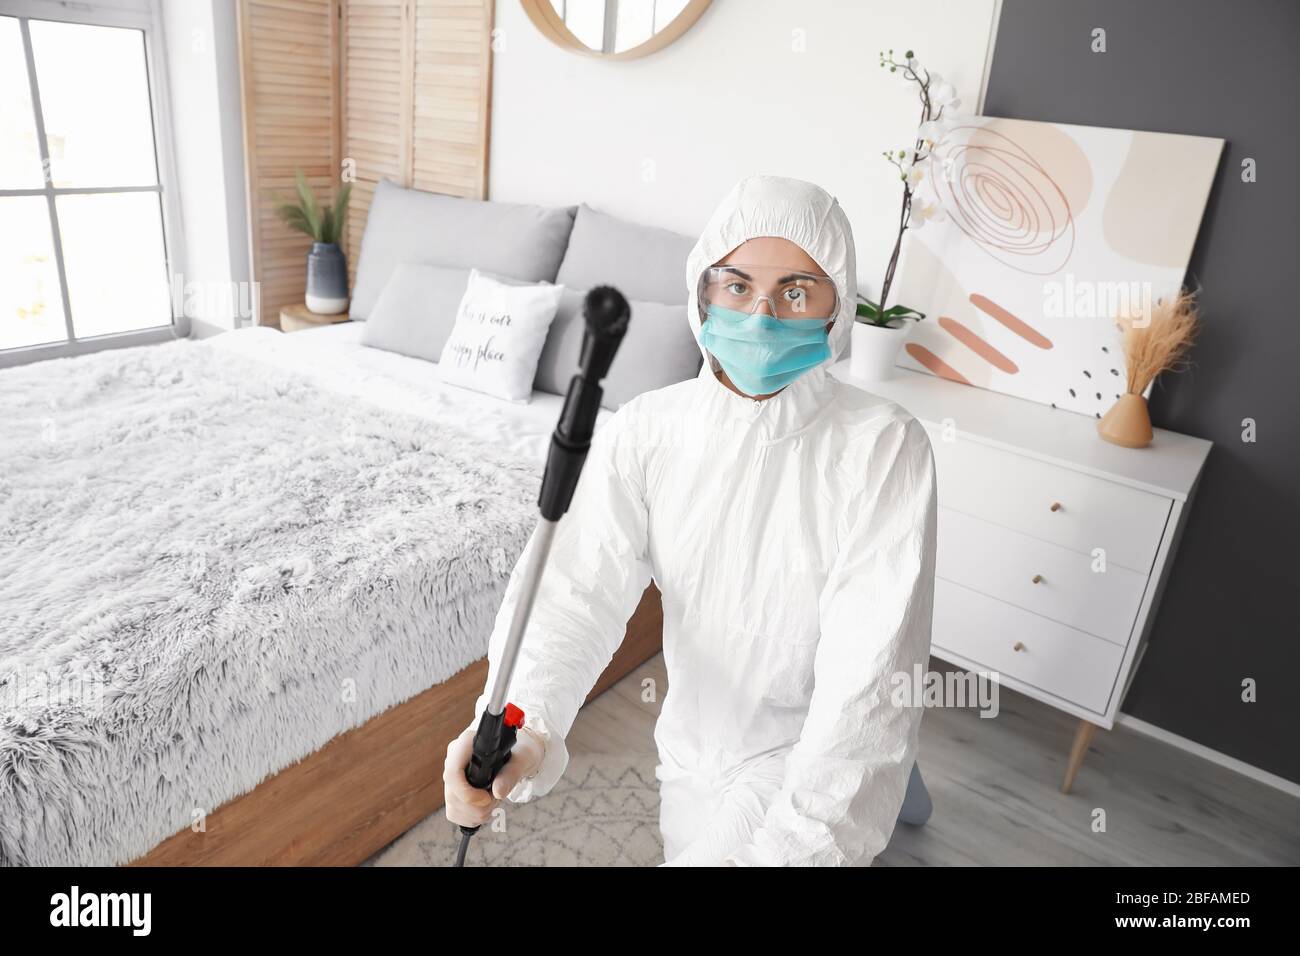 Worker in biohazard suit disinfecting house Stock Photo